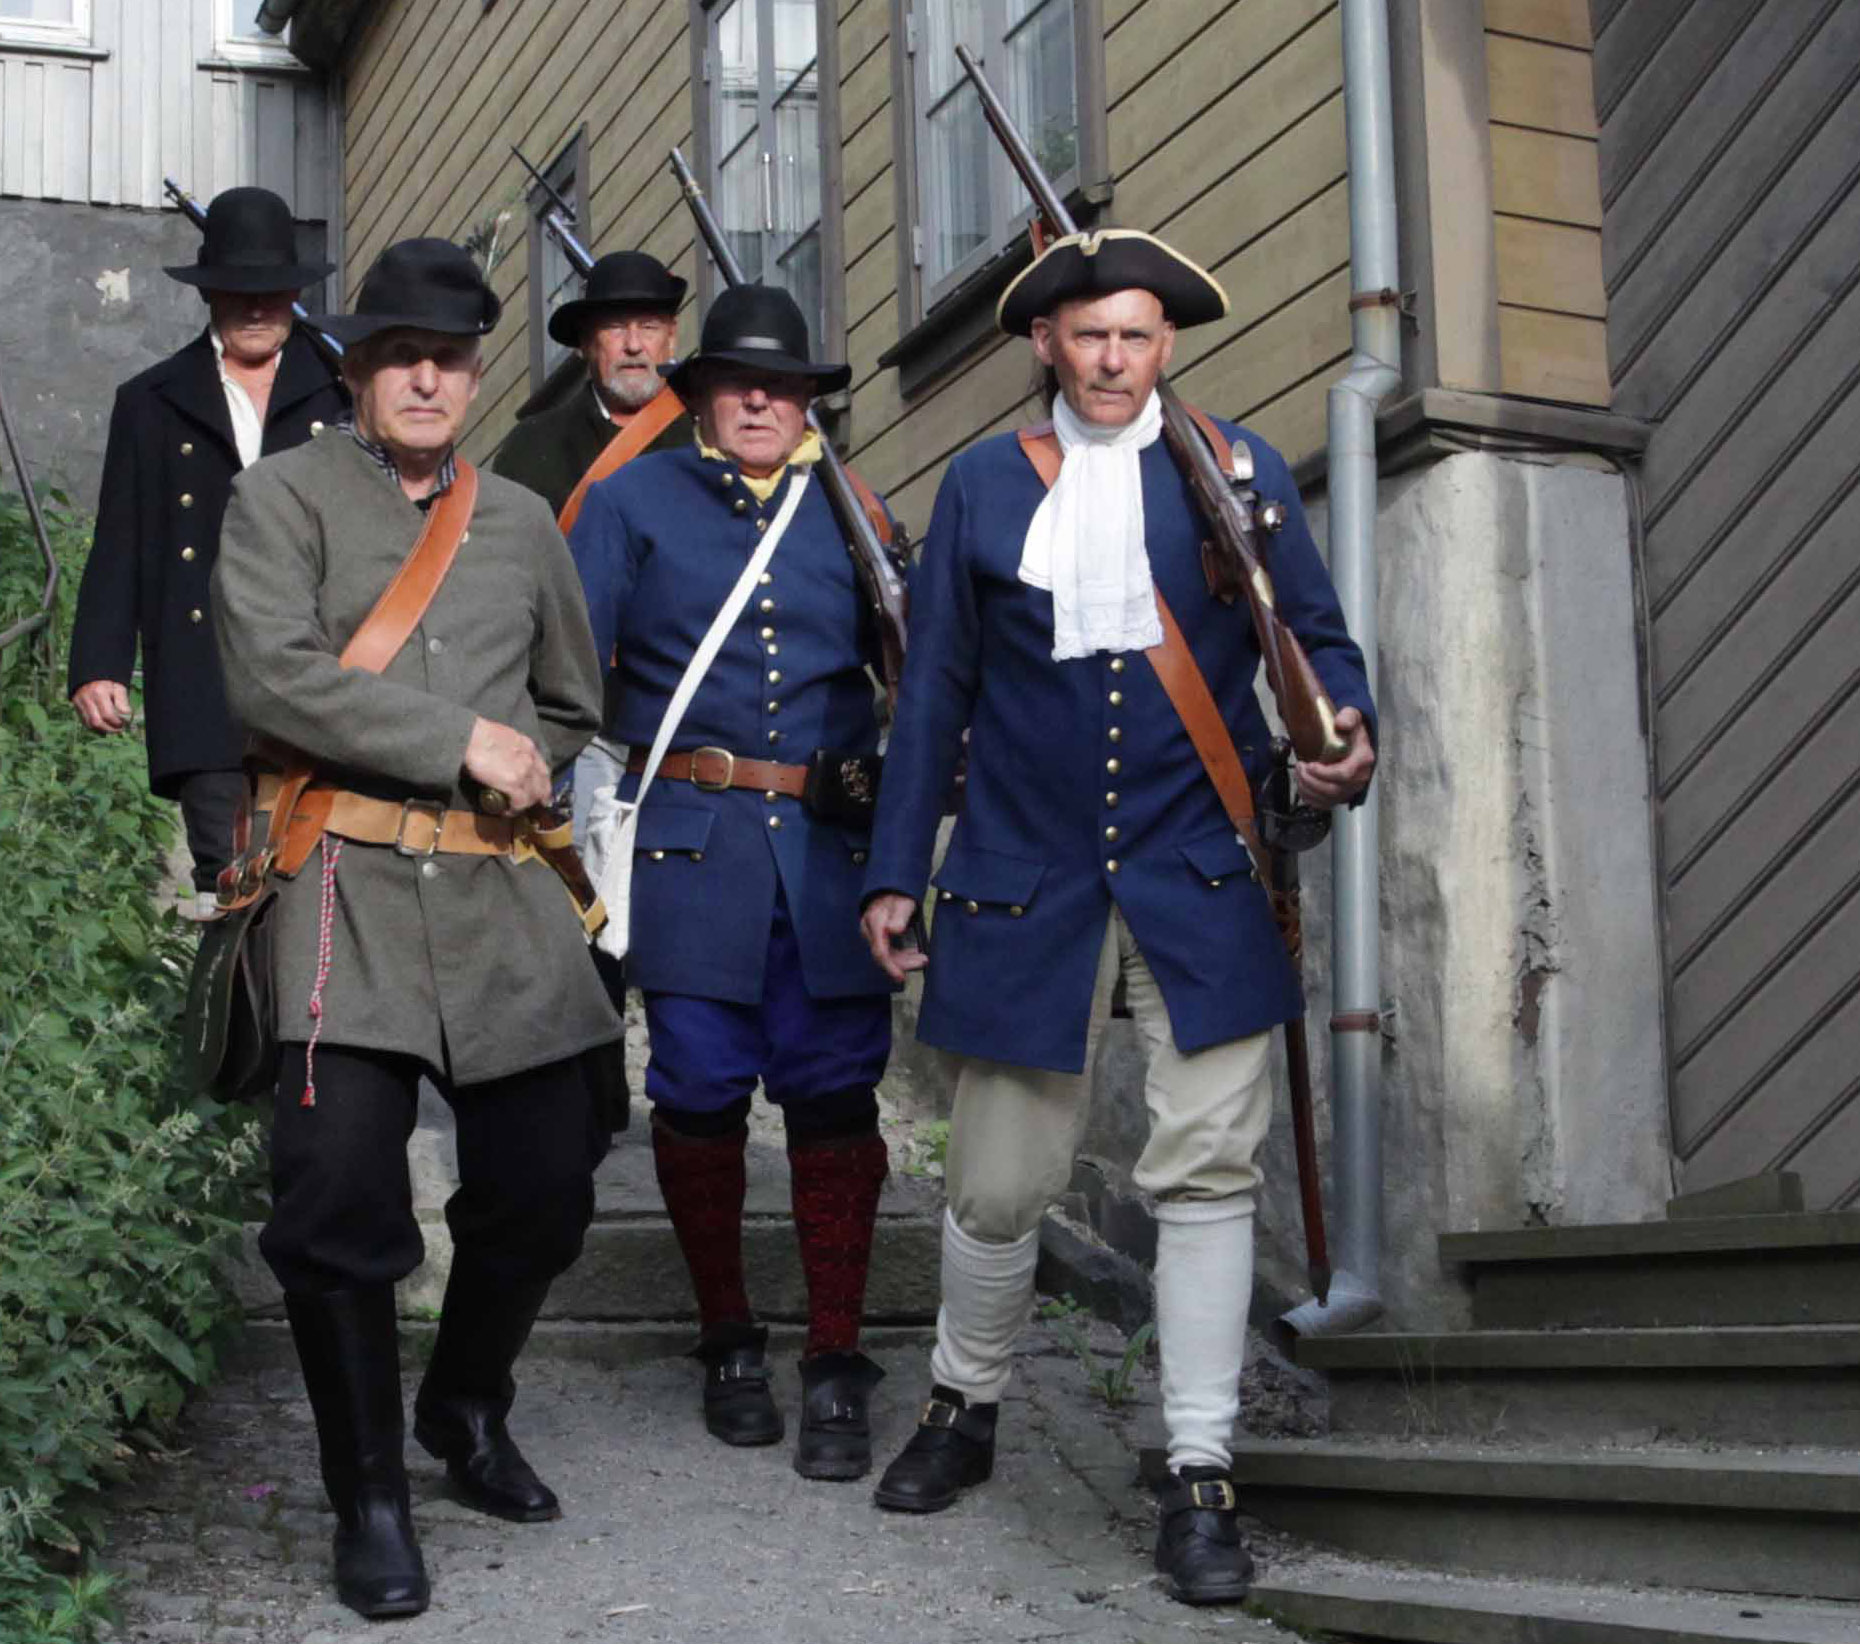 Fredrikshald Borgervæpning viser historiske tablåer fra 1716. Foto: Per Windahl, Fredrikshald Borgervæpning